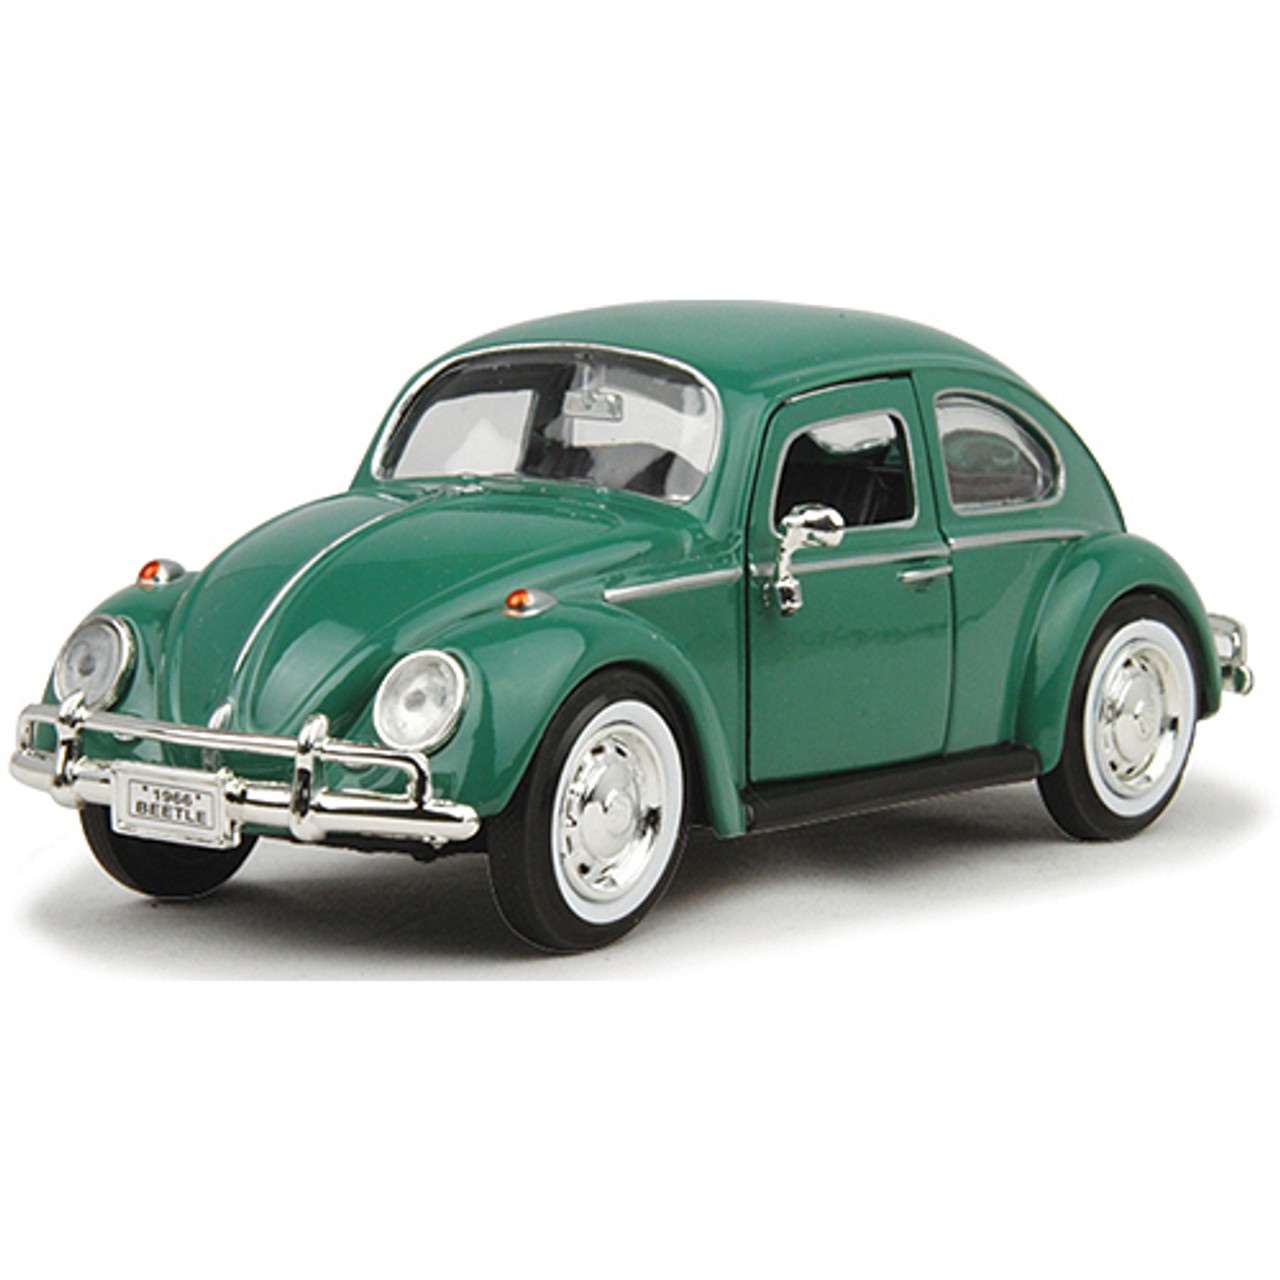 1966 VW Beetle - green 1:24 Scale Diecast Model